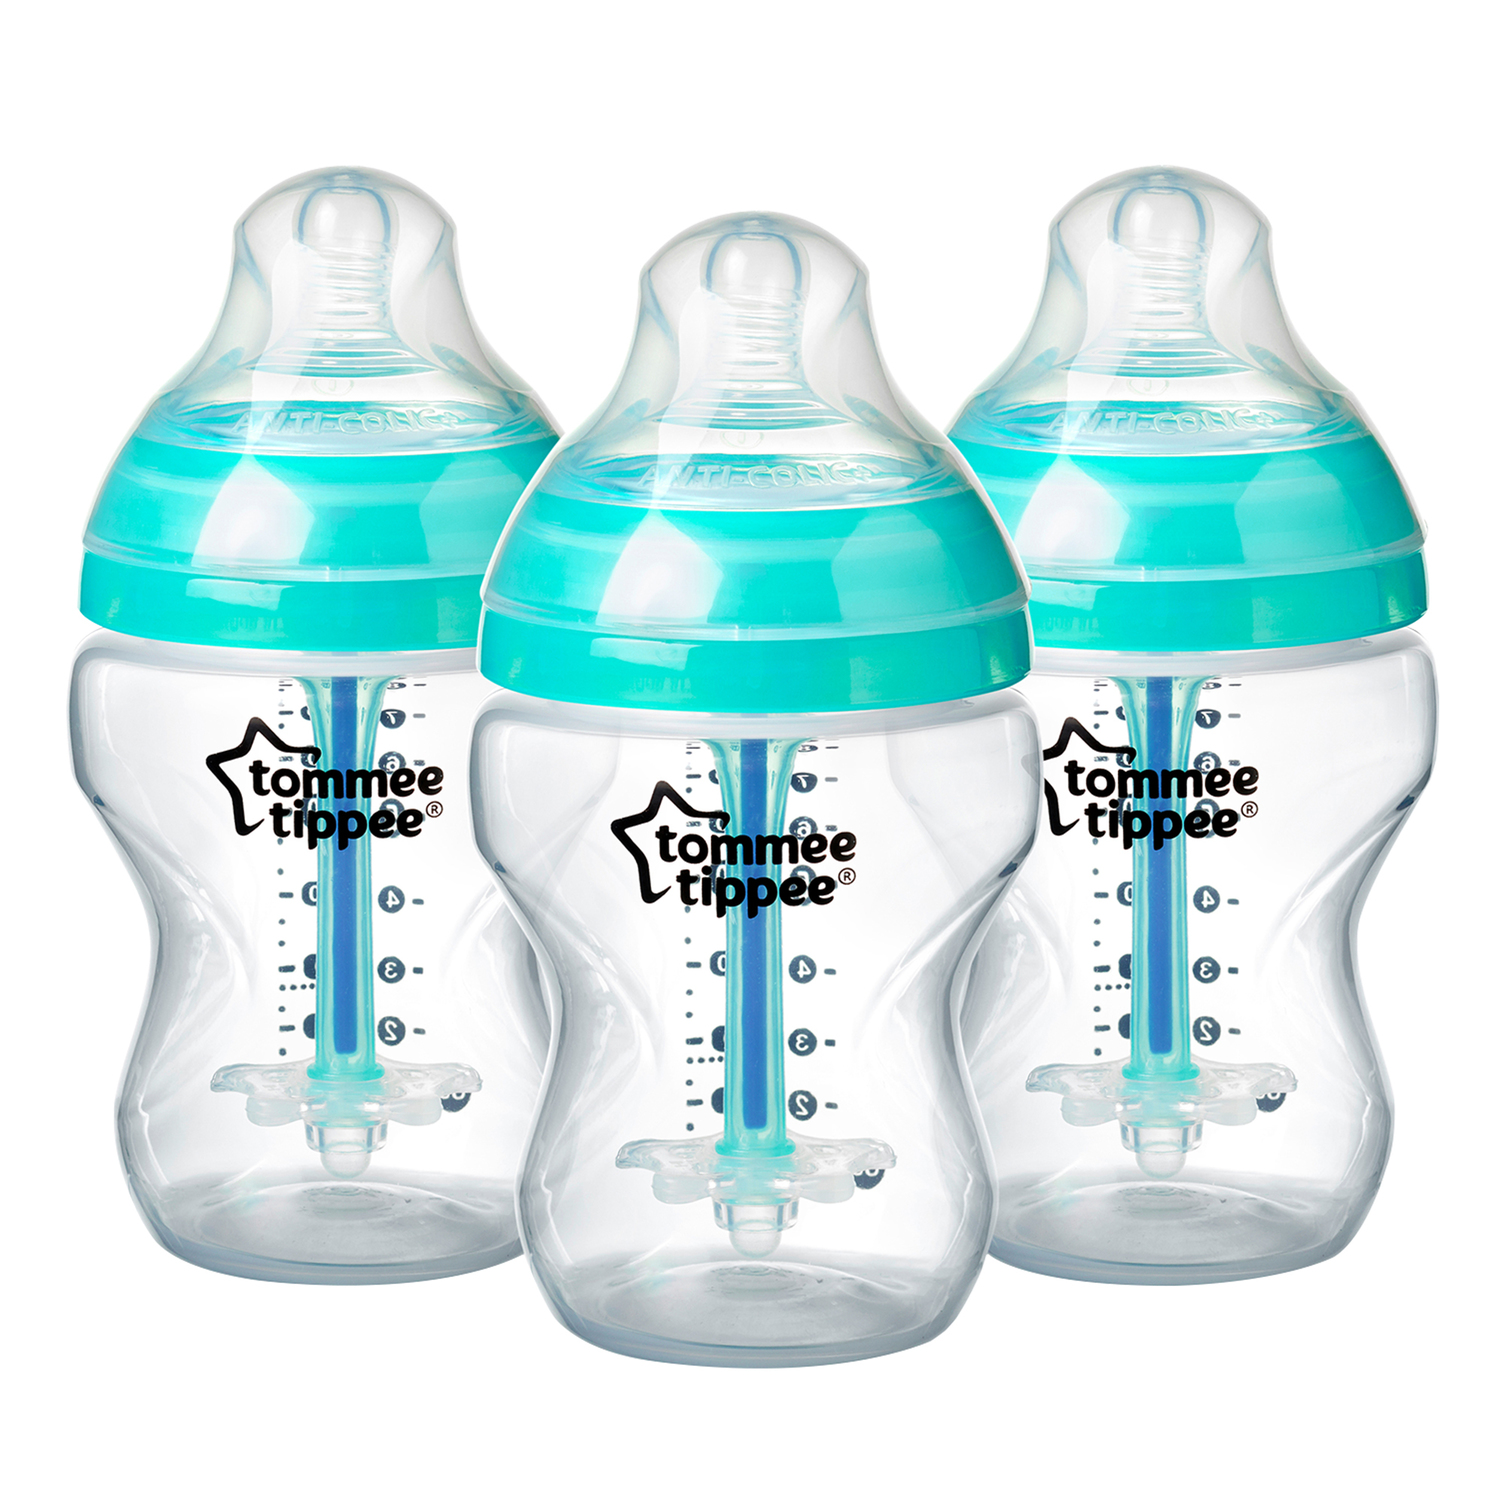 Tommee Tippee Advanced Anti Colic Newborn Baby Bottle Feeding Gift Set - image 4 of 13